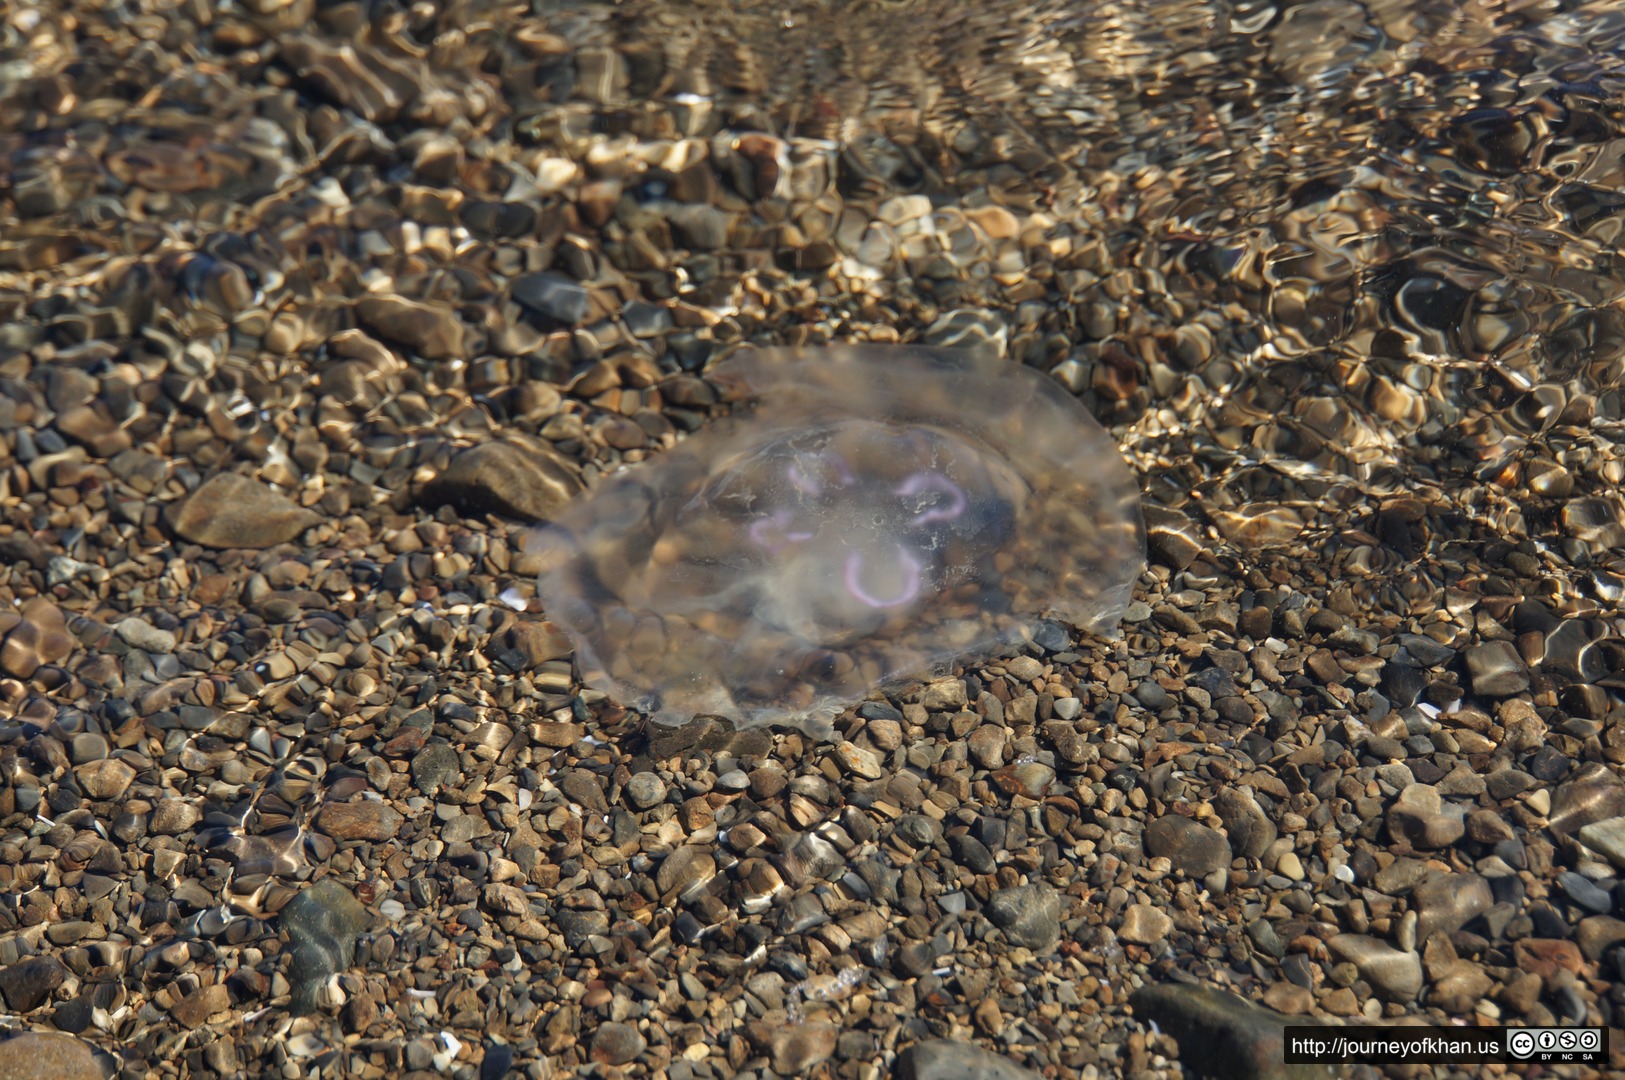 Jellyfish on the Rocks